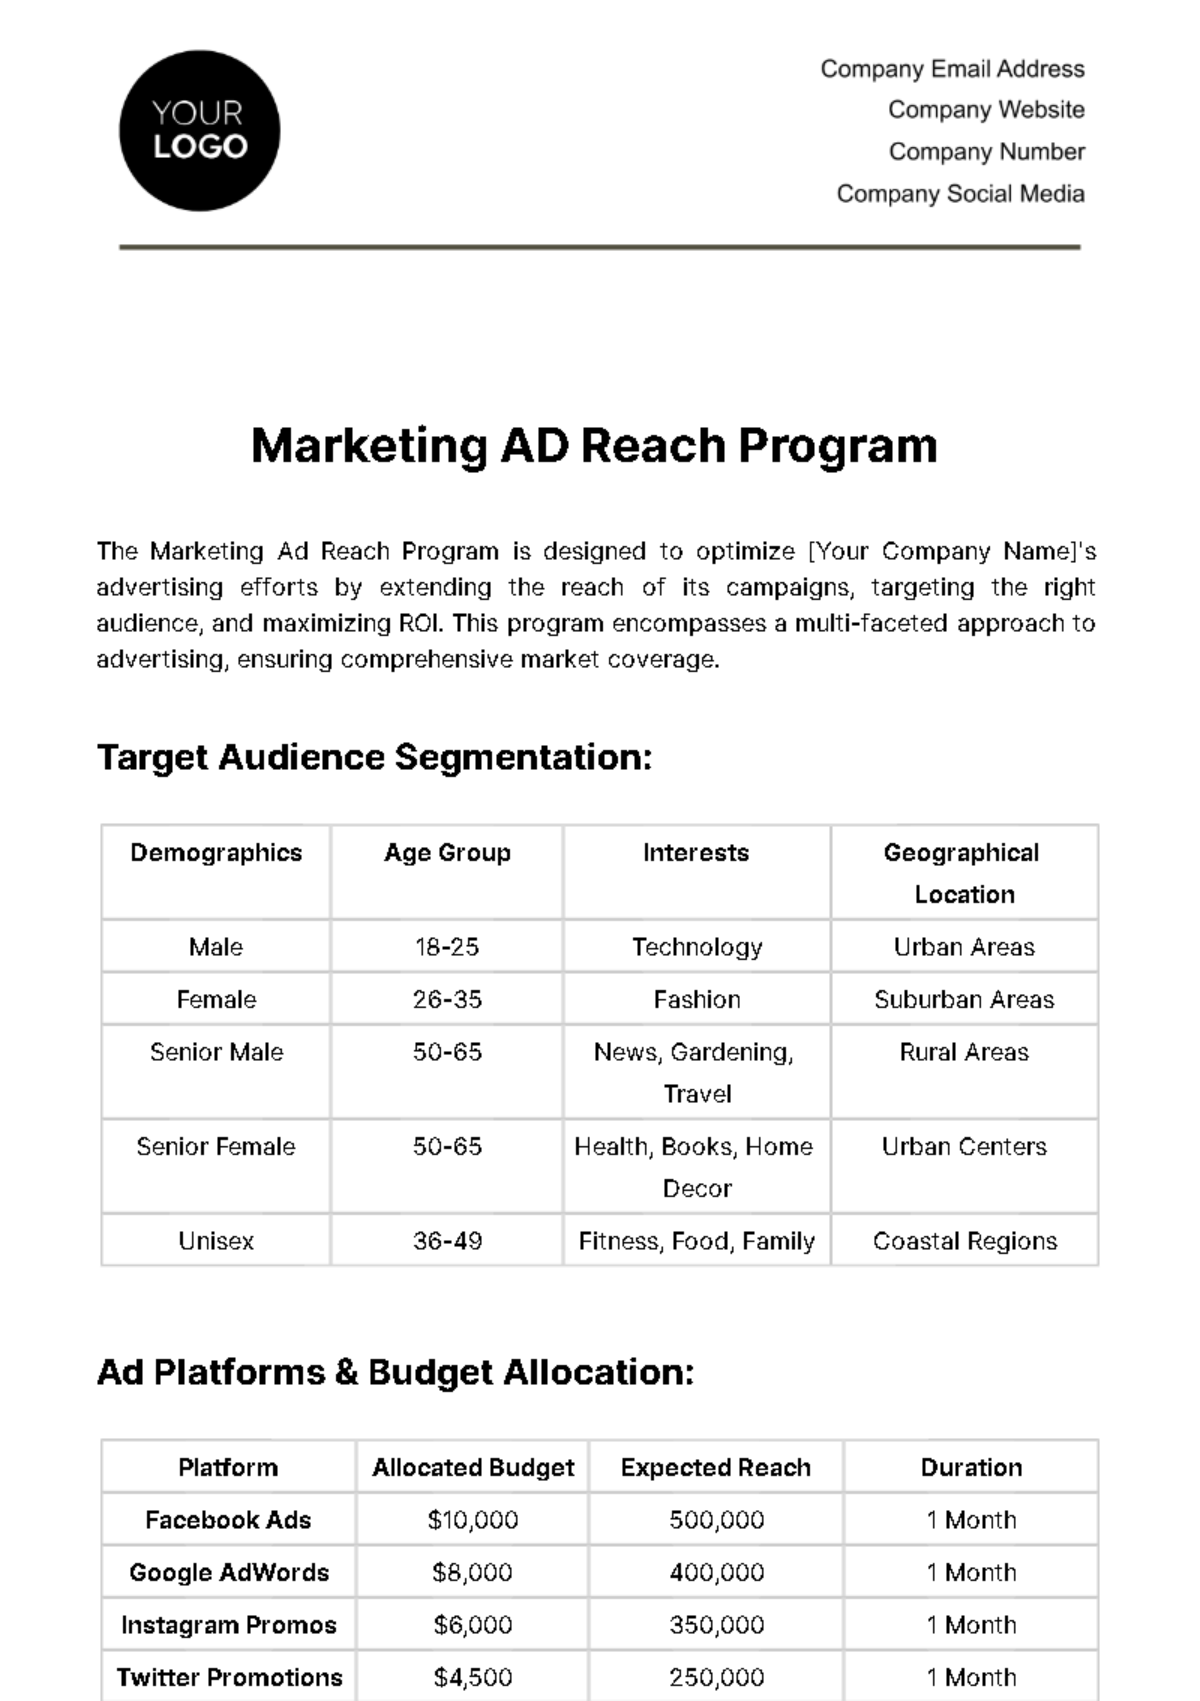 Free Marketing Ad Reach Program Template